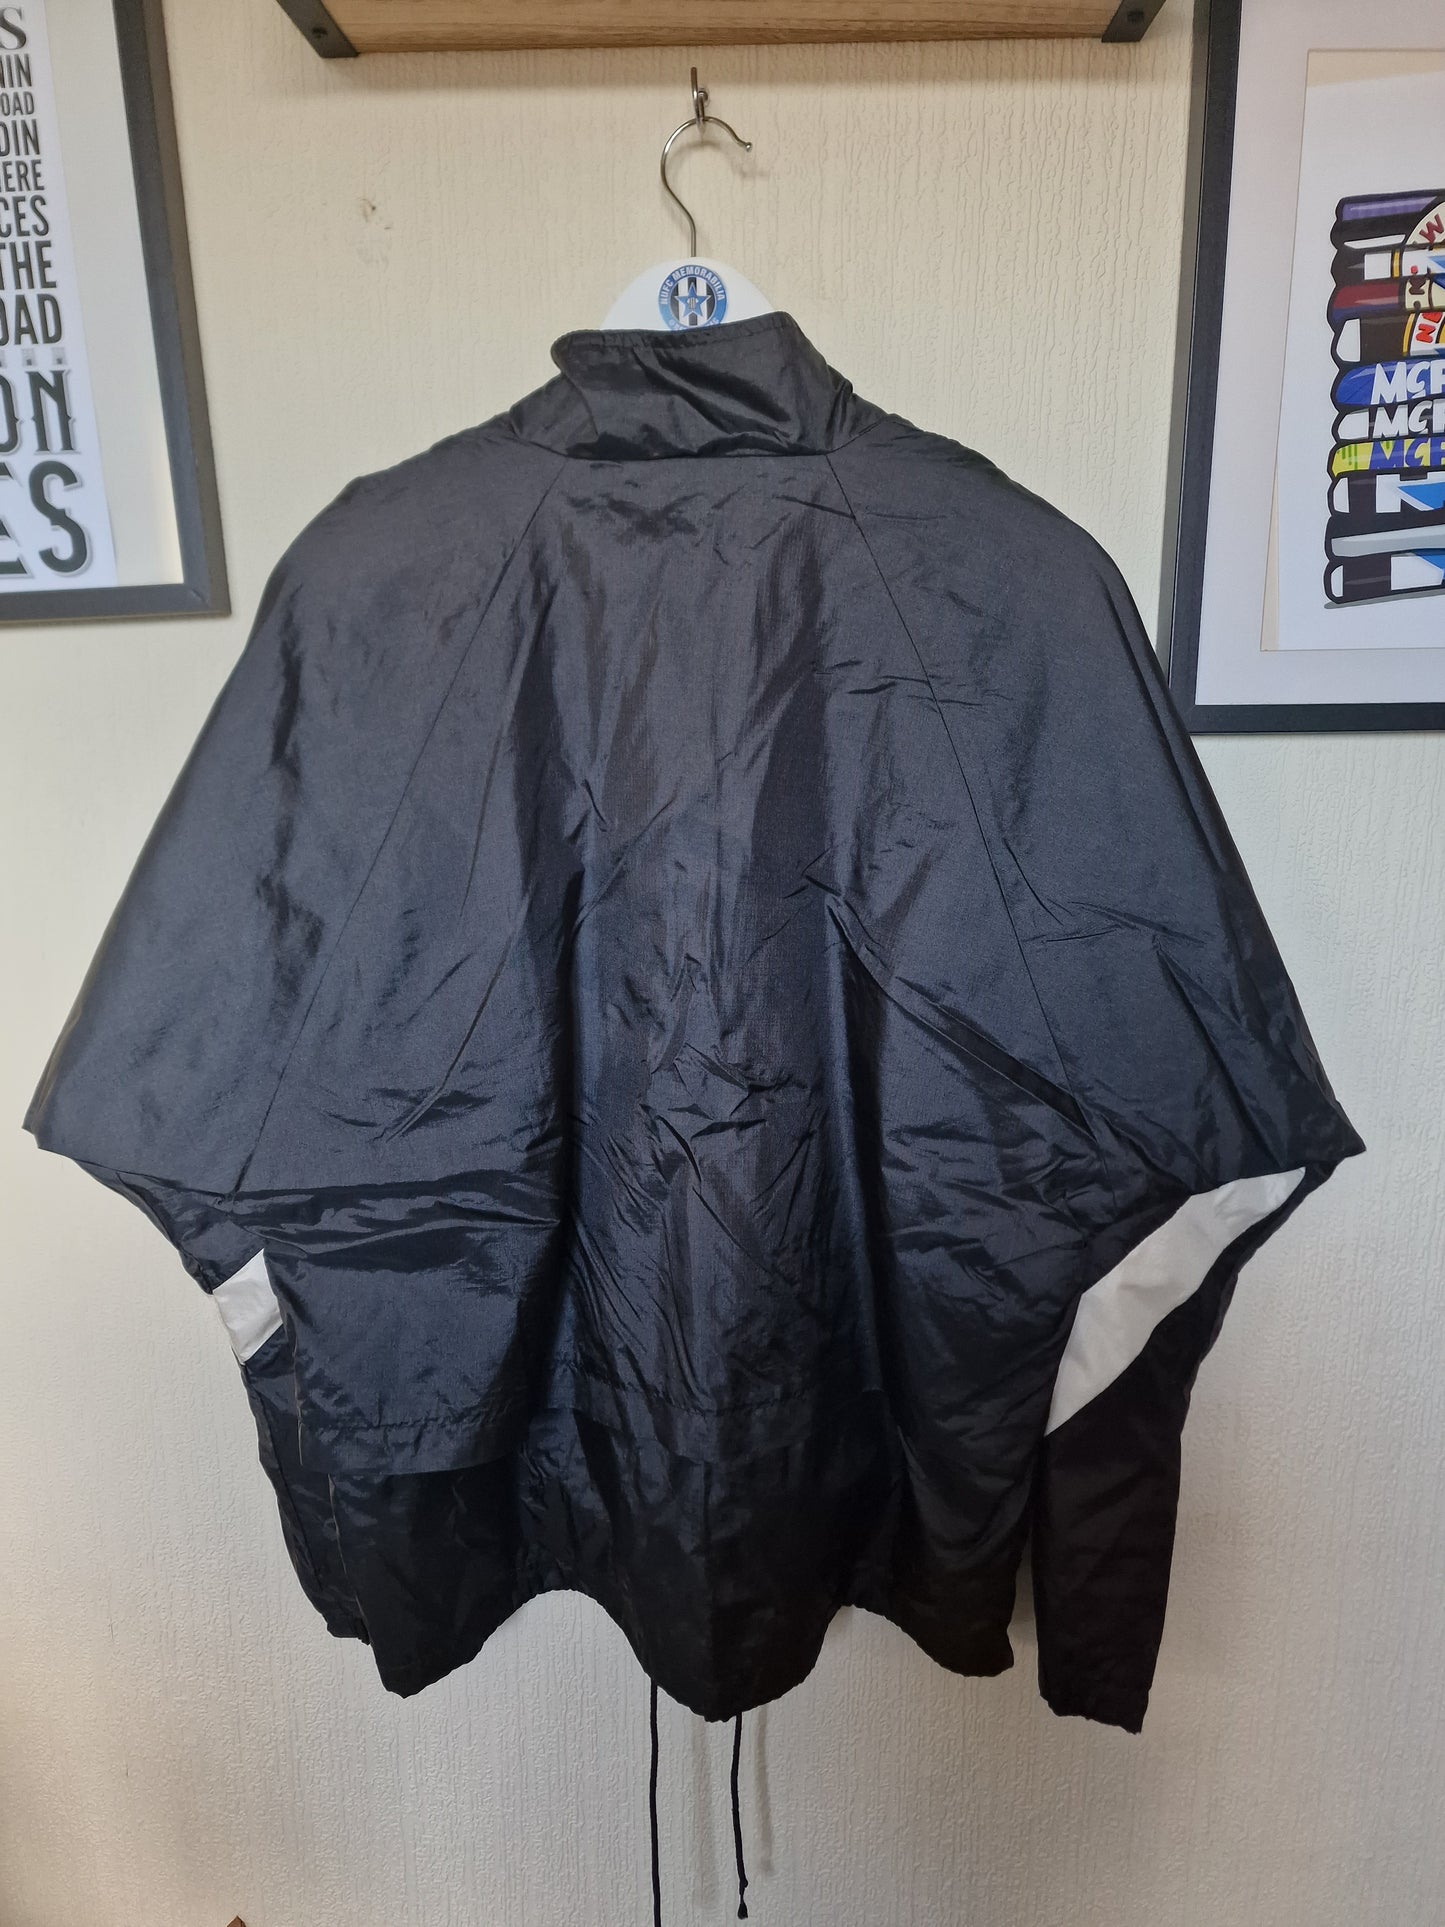 Newcastle United 1990/93 Rain jacket - Small